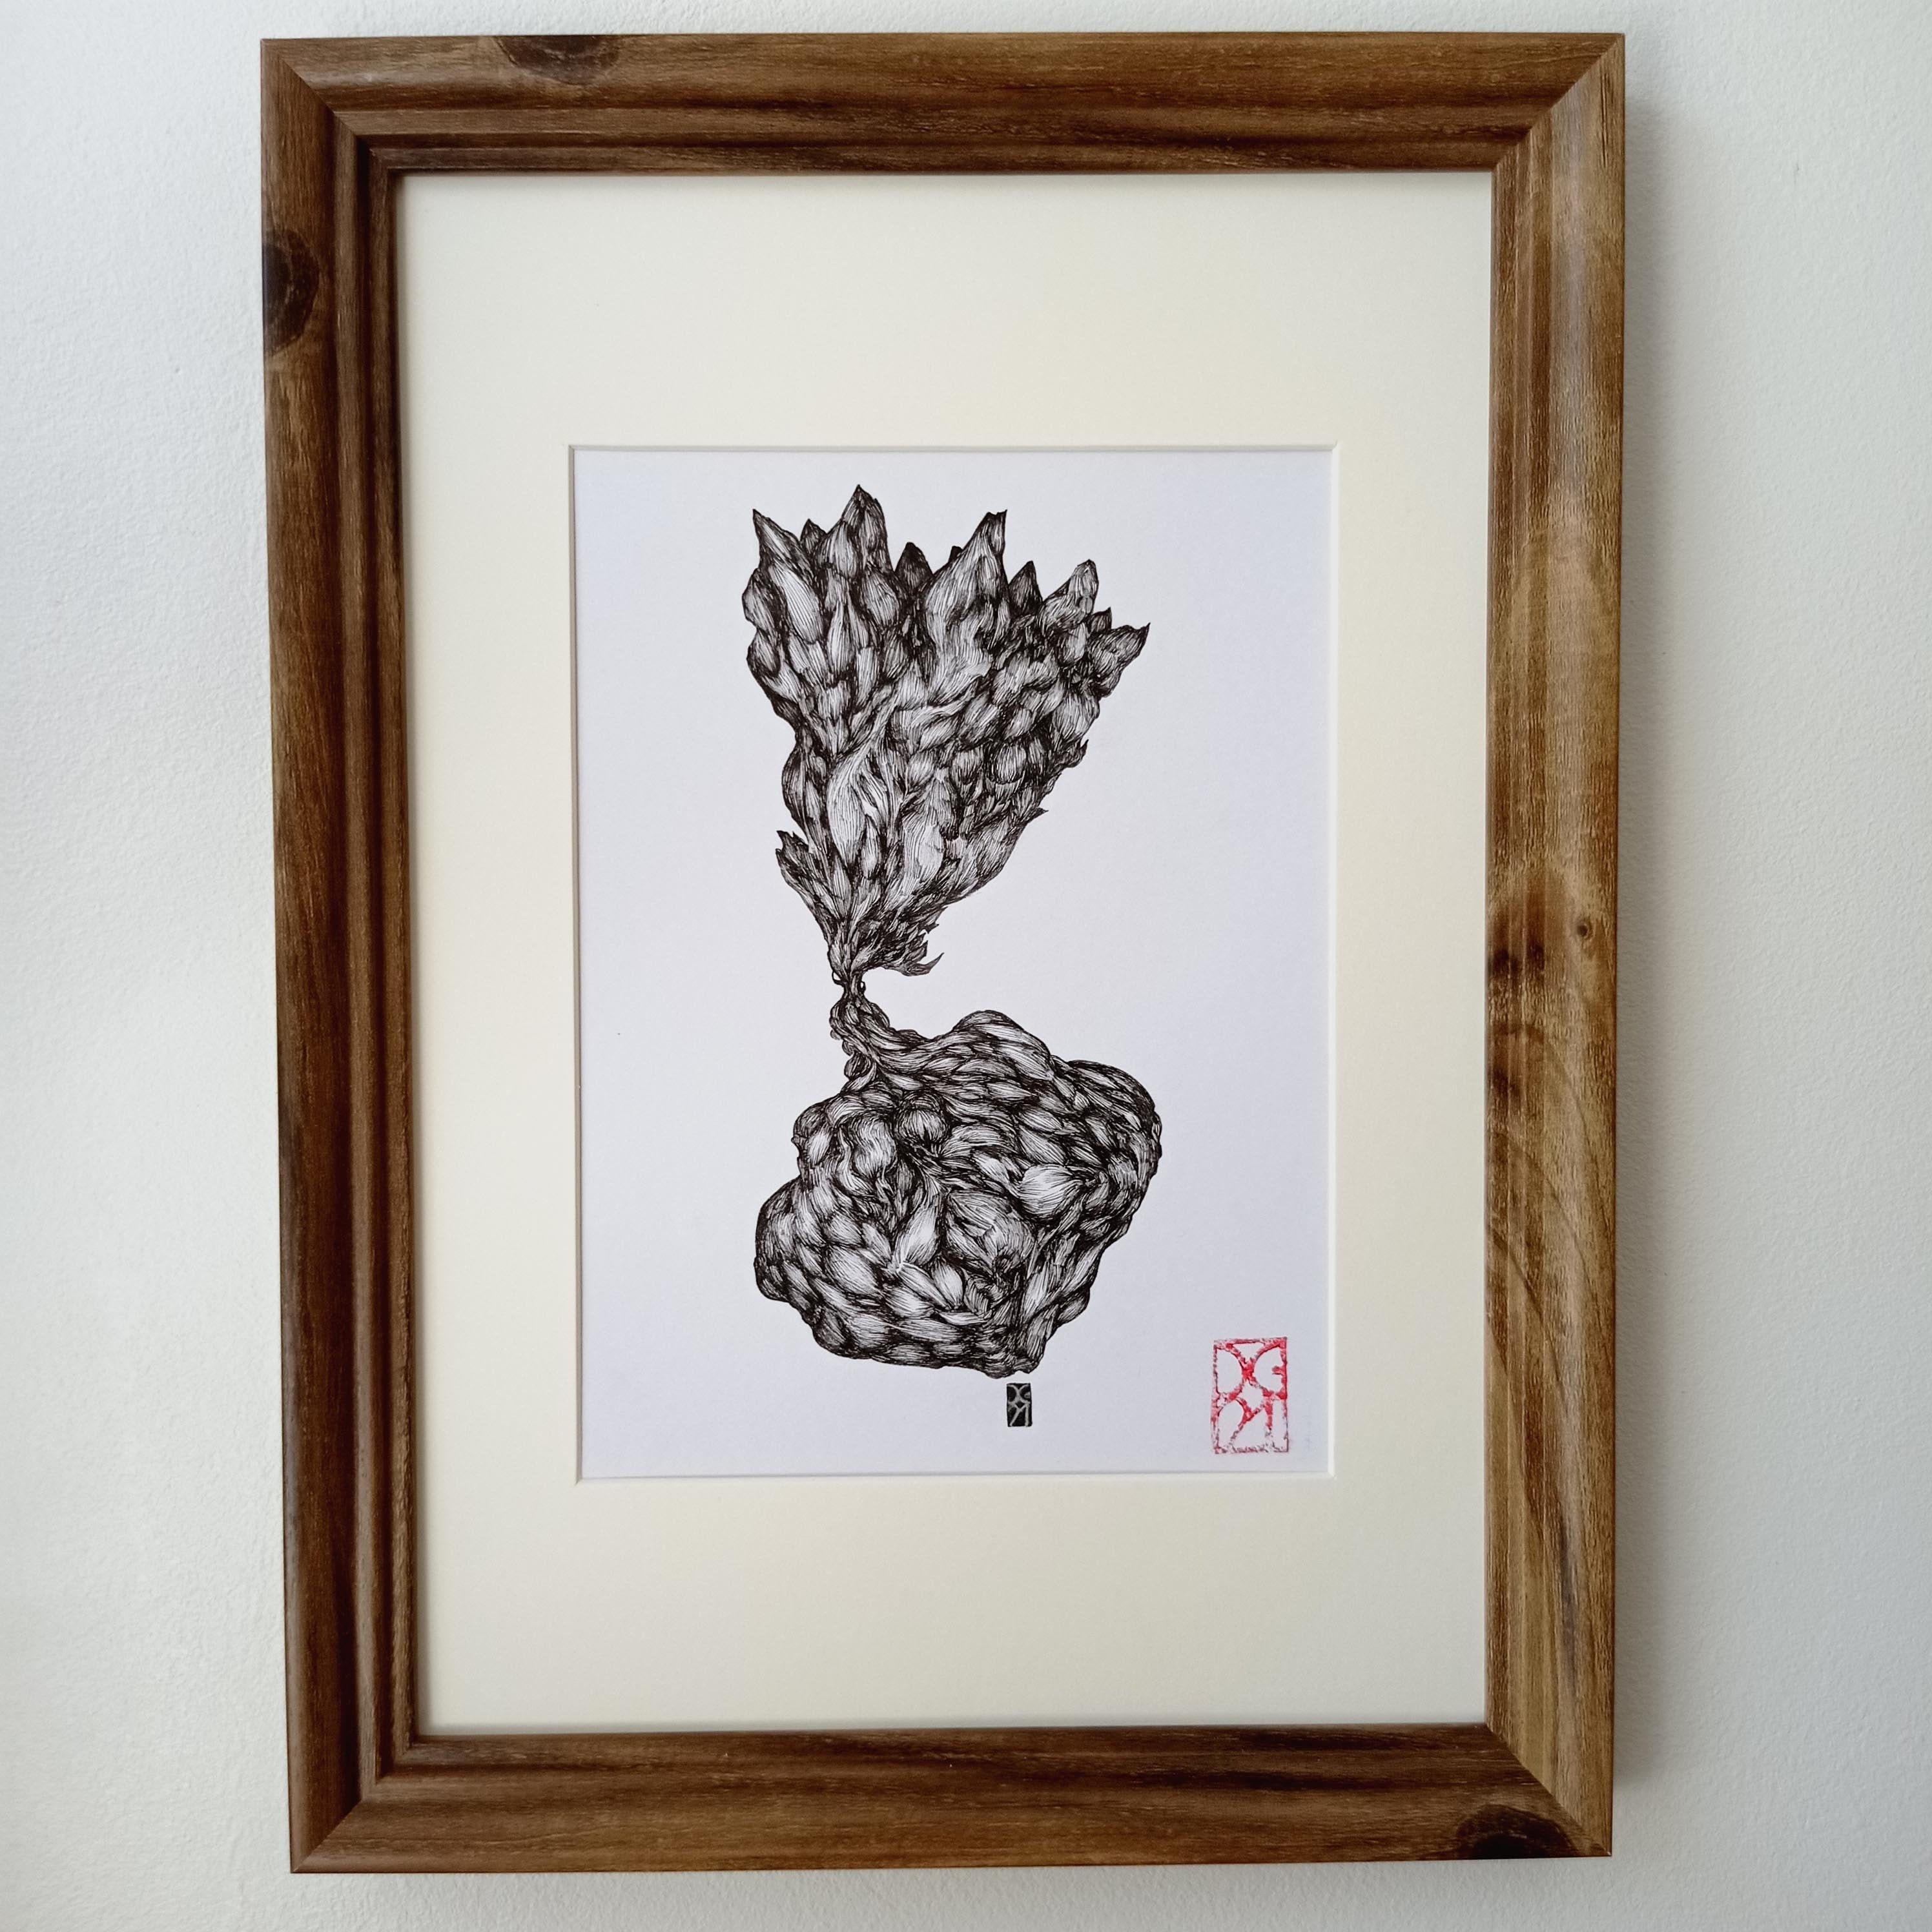 Original work Turnip ink on bristol paper 21cmx15cm with its frame